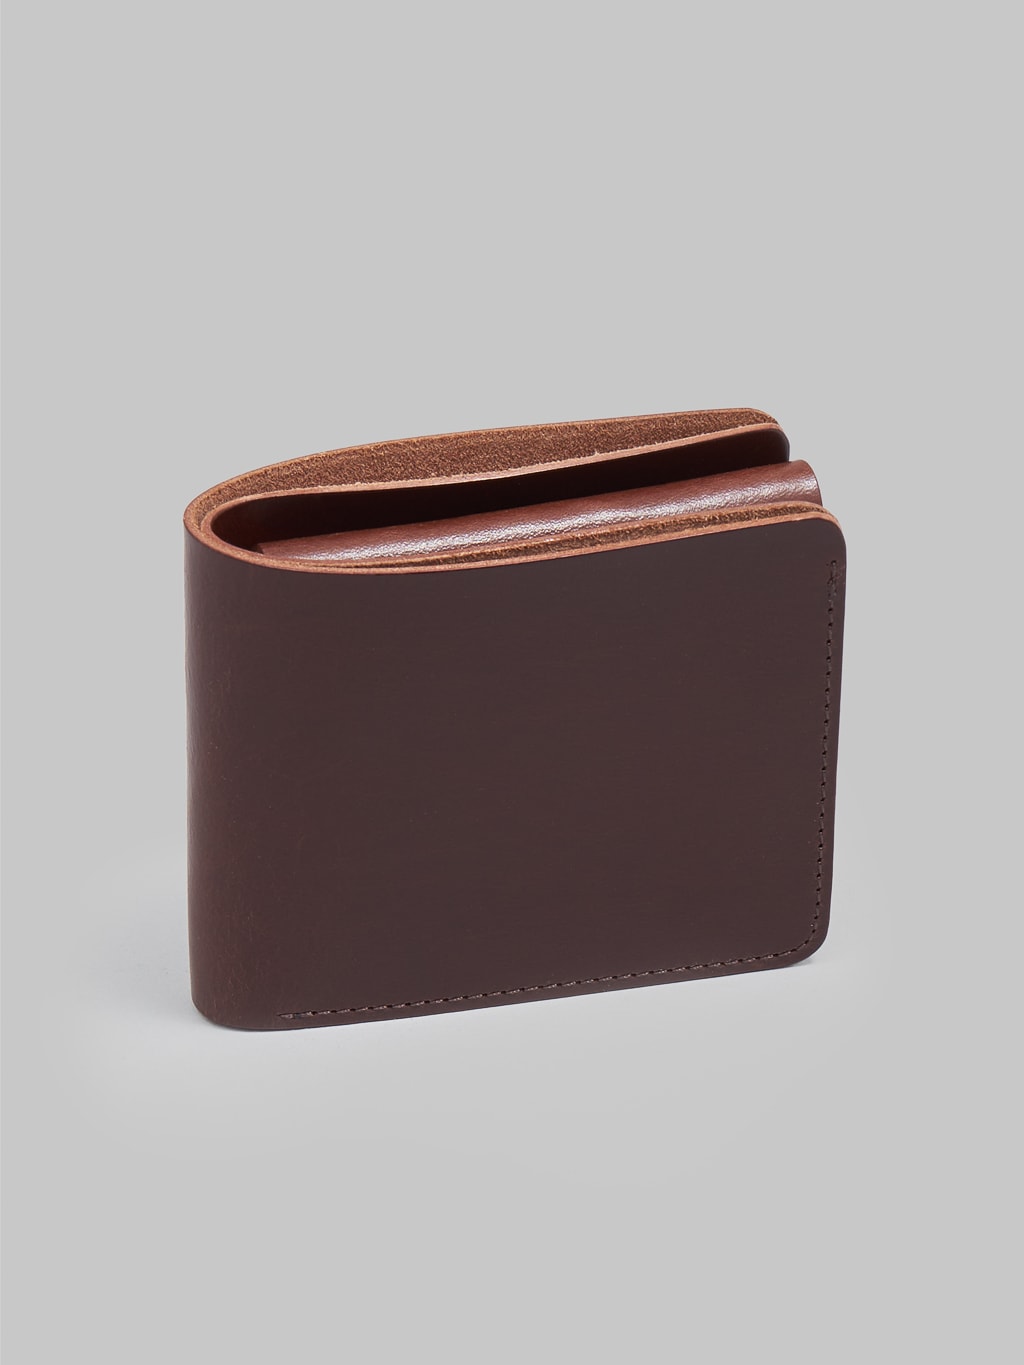 Kobashi Studio Leather Fold Wallet Brown